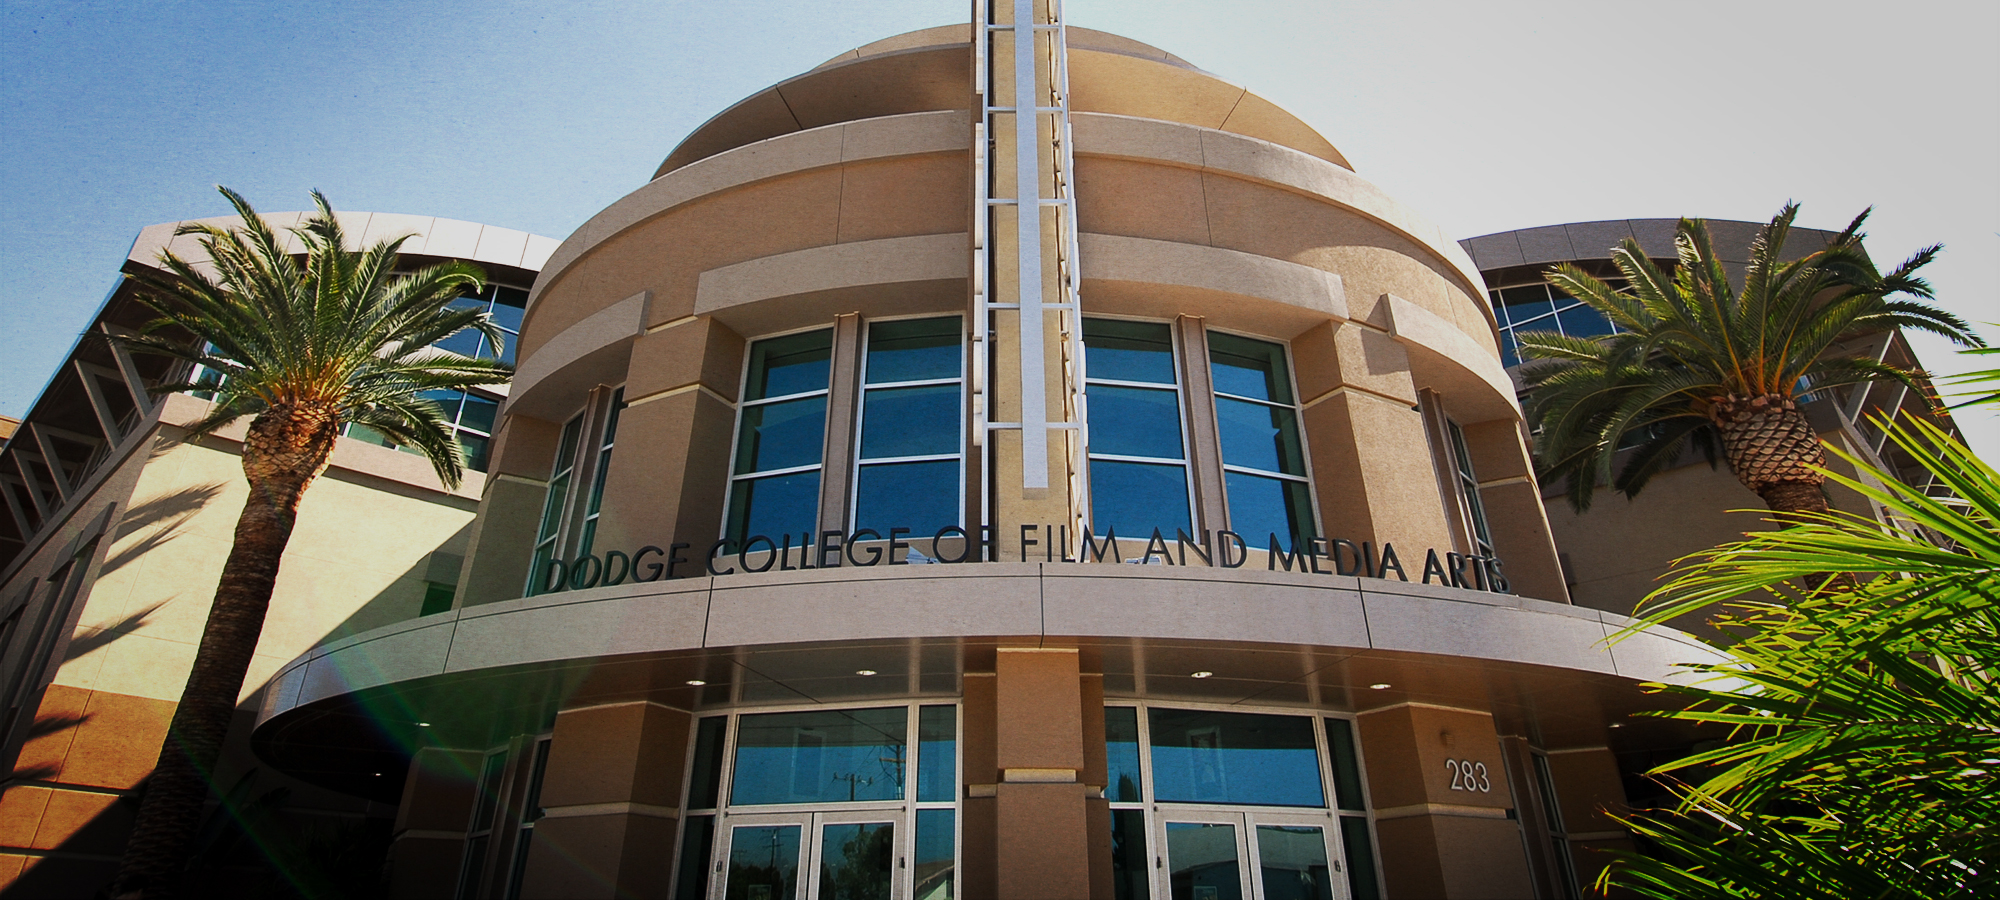 Dodge College of Film and Media Arts